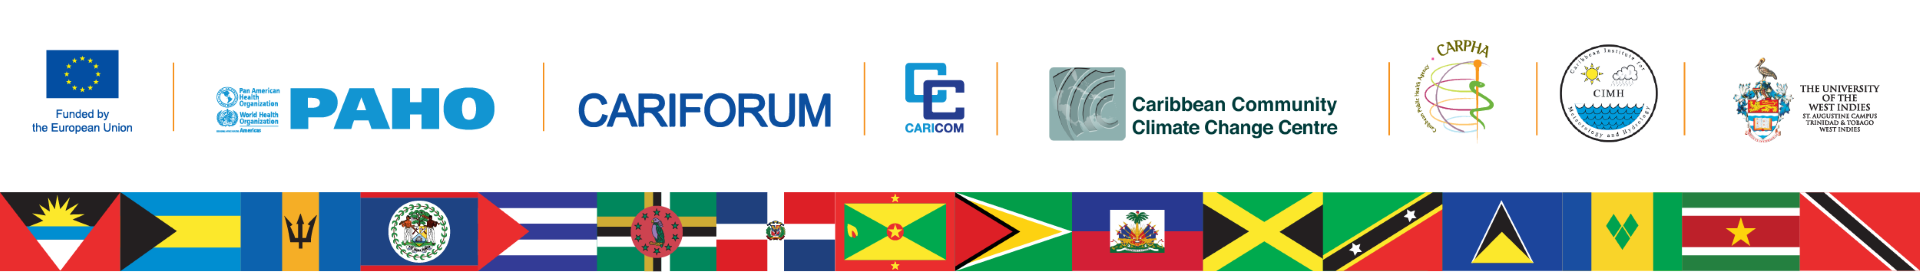 EU CARICOM Logo and Hashtag